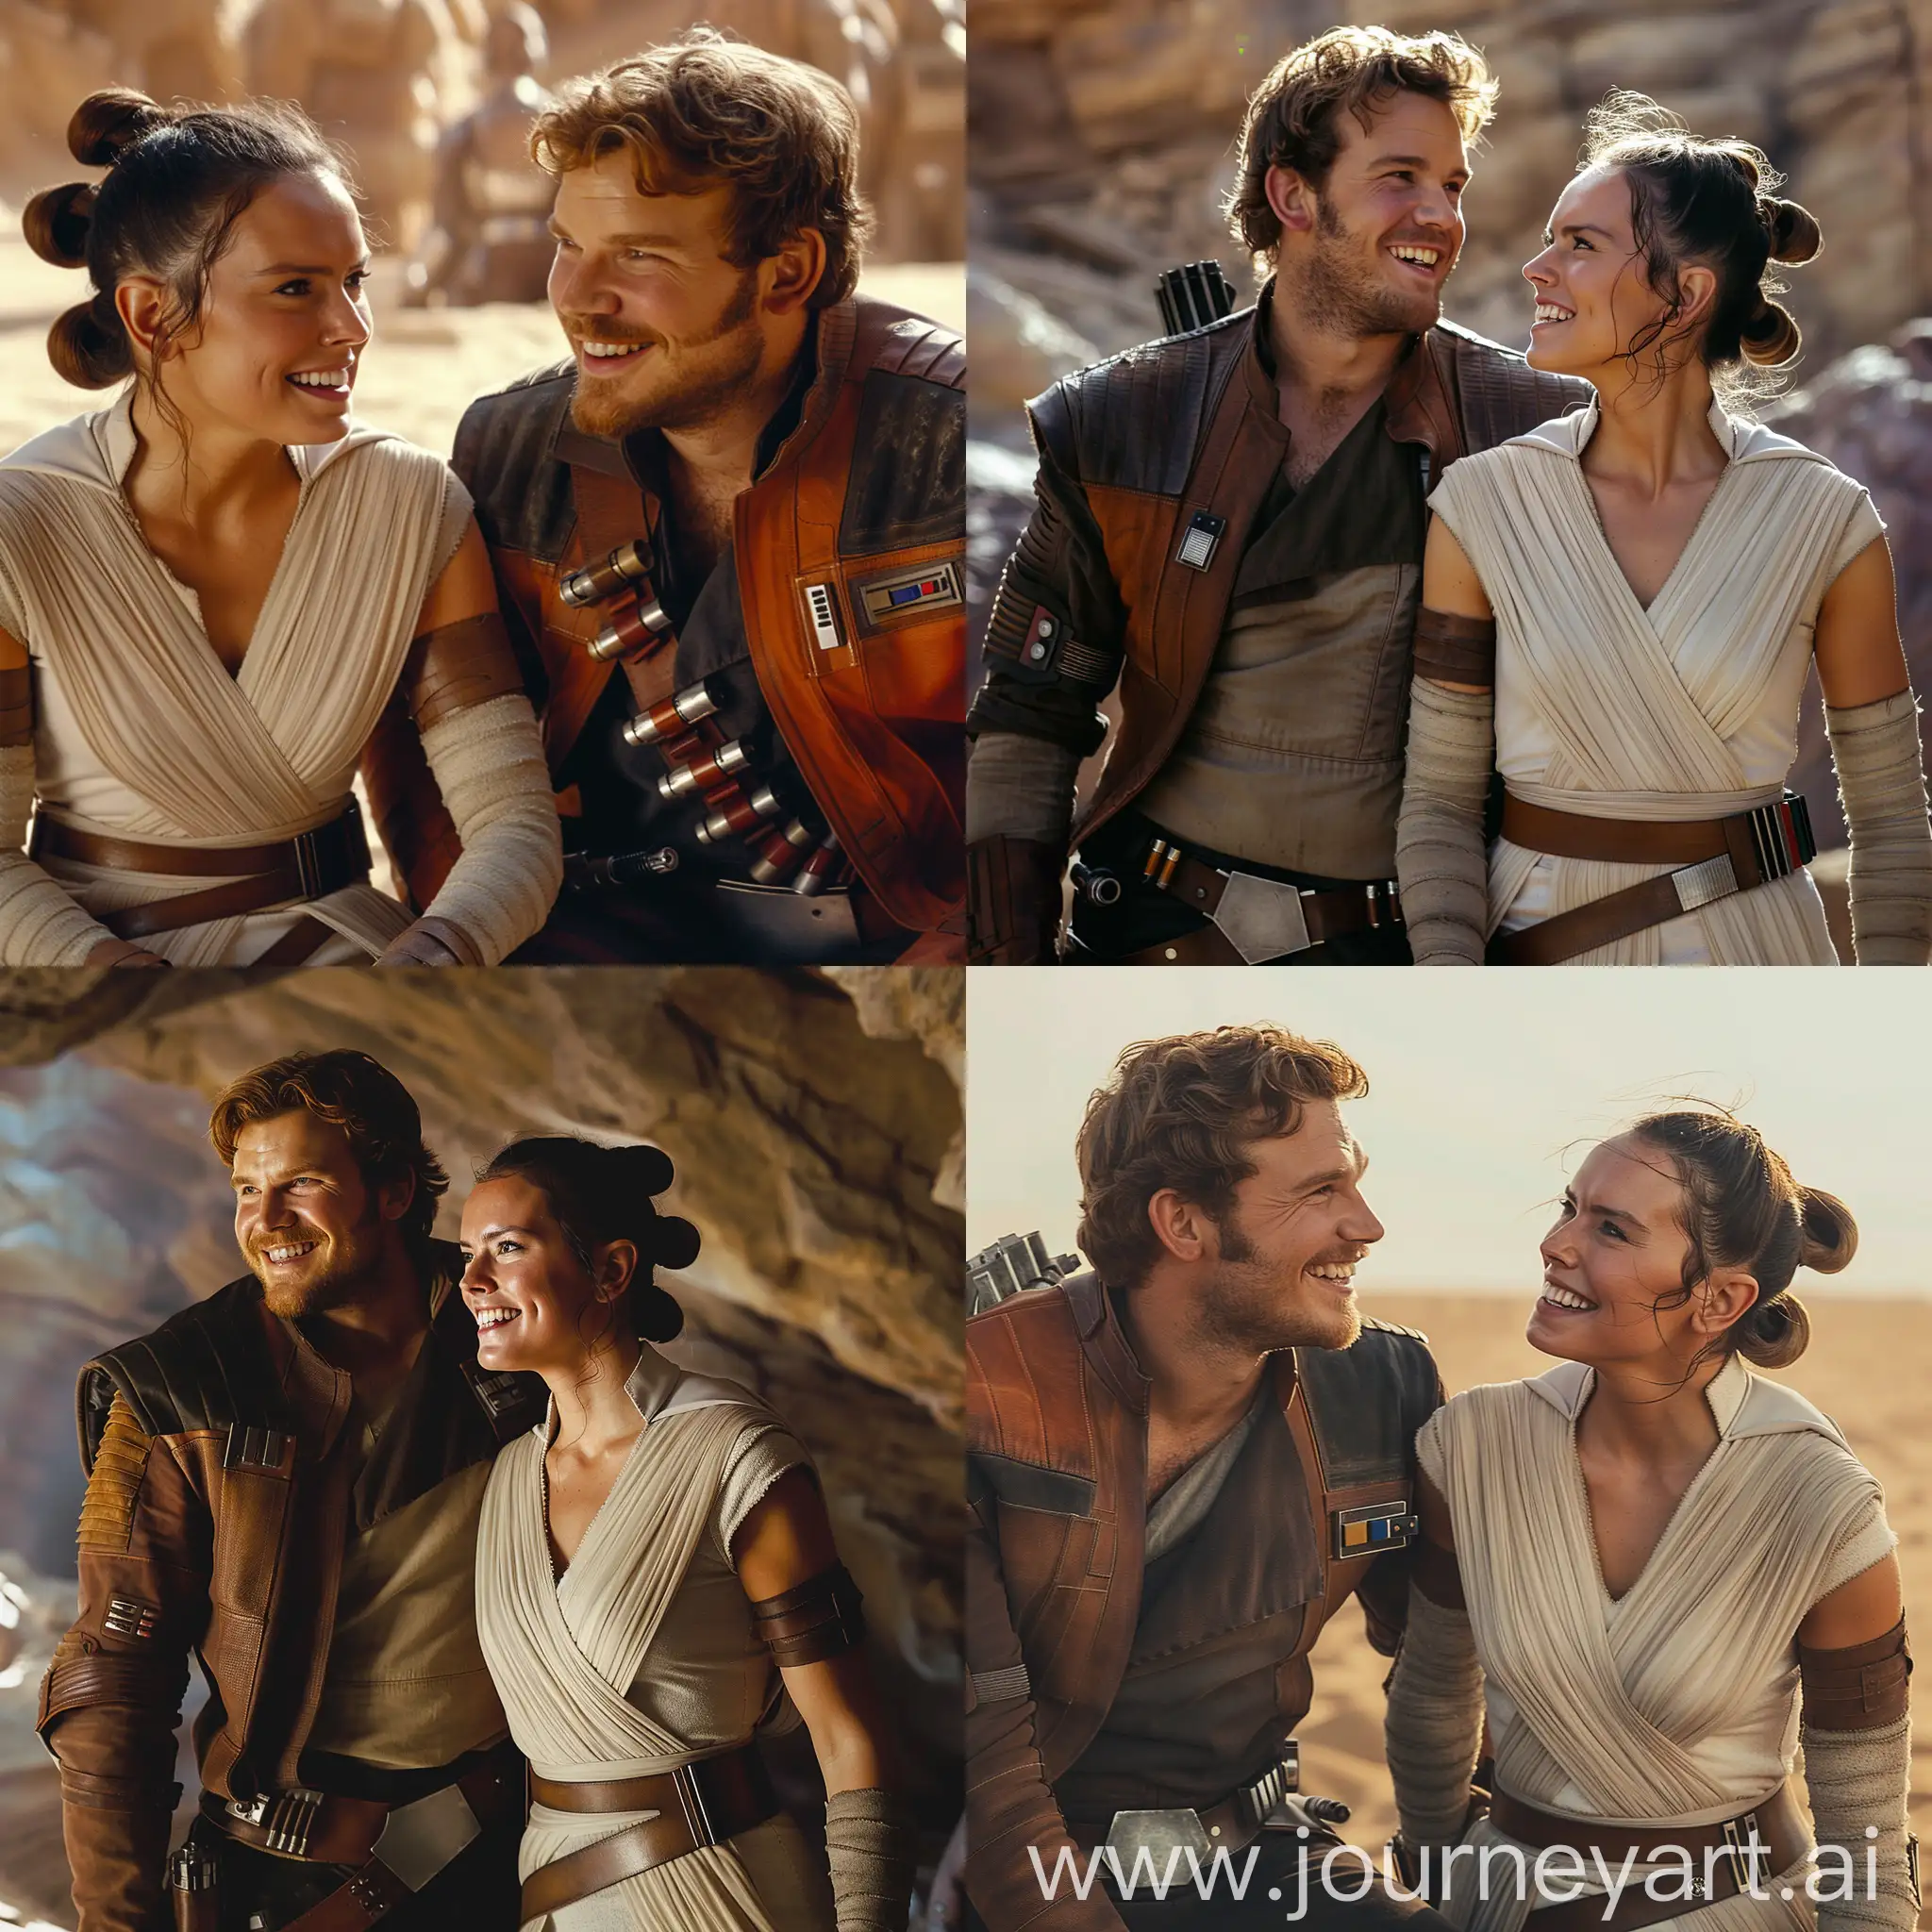 Rey-Skywalker-and-Peter-Quill-in-Joyous-Cinematic-Star-Wars-Scene